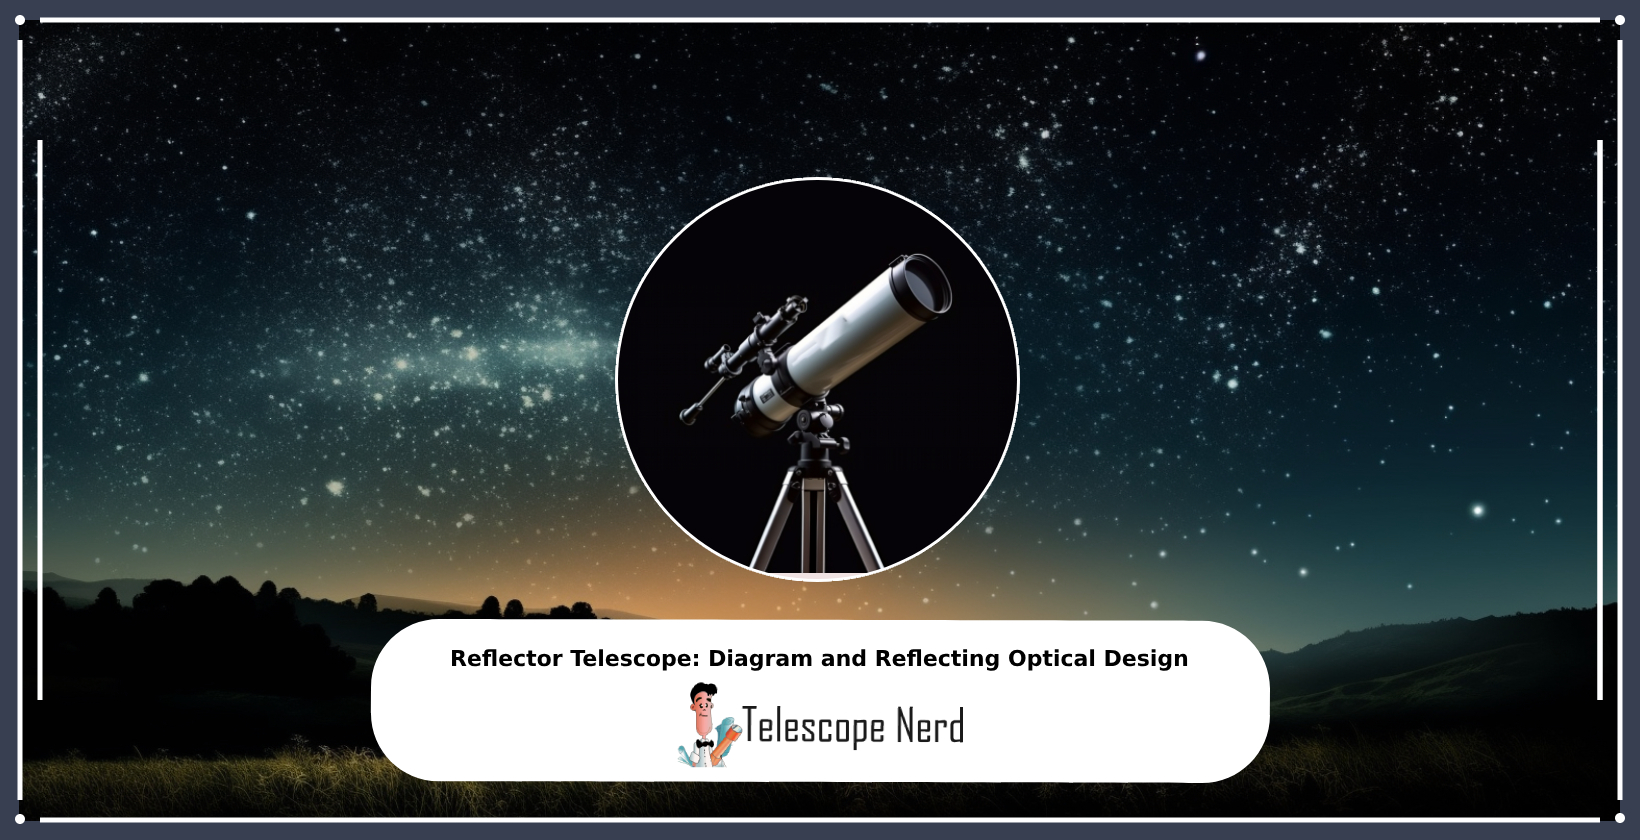 Reflector Telescope: Diagram and Reflecting Optical Design